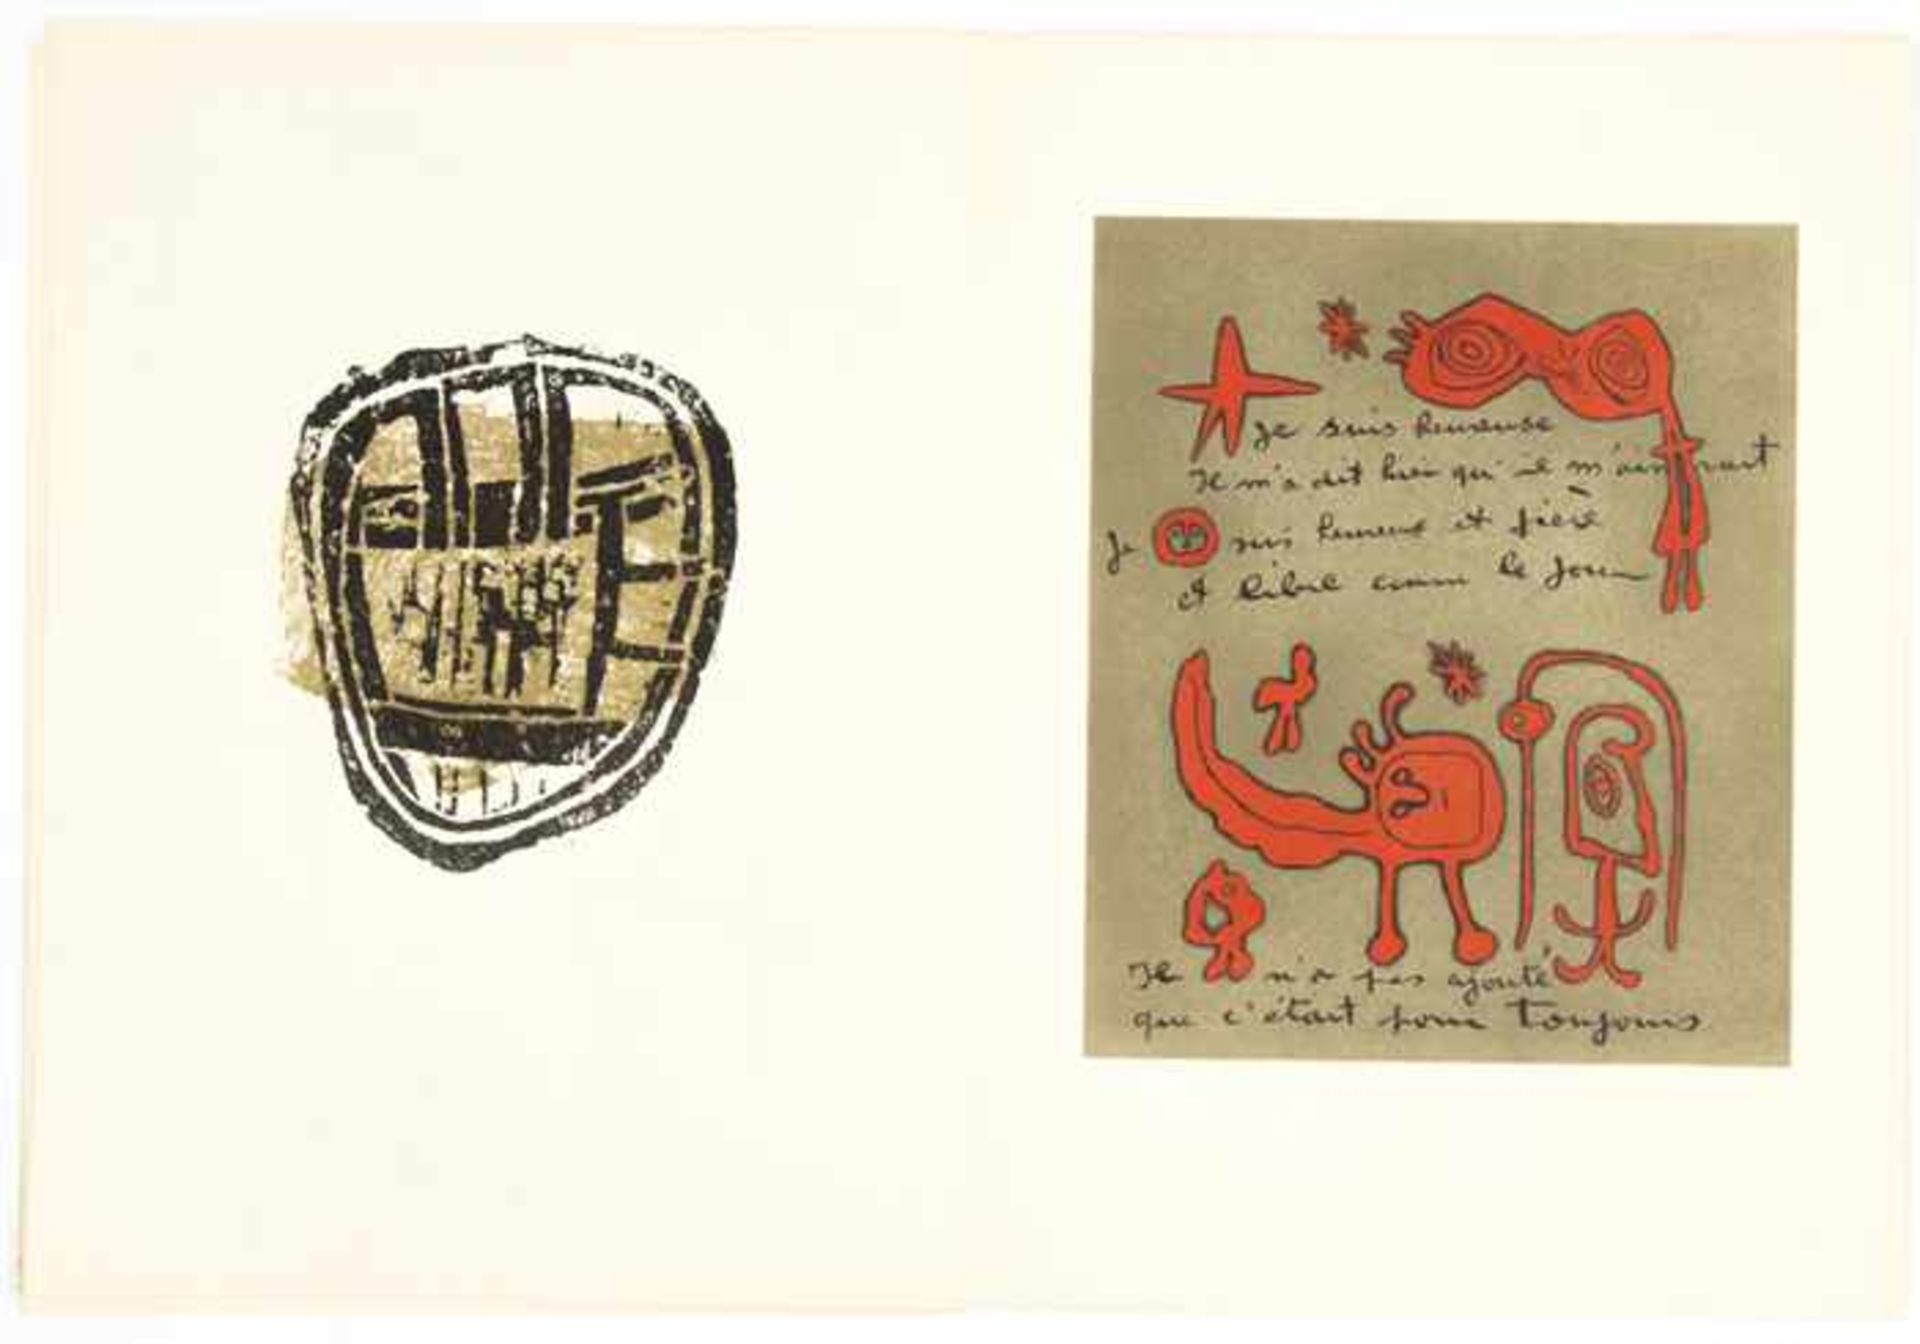 Braque, Georges Derrière le Miror, Edition 112, 1958 Seitenanzahl: 16 - Image 3 of 3